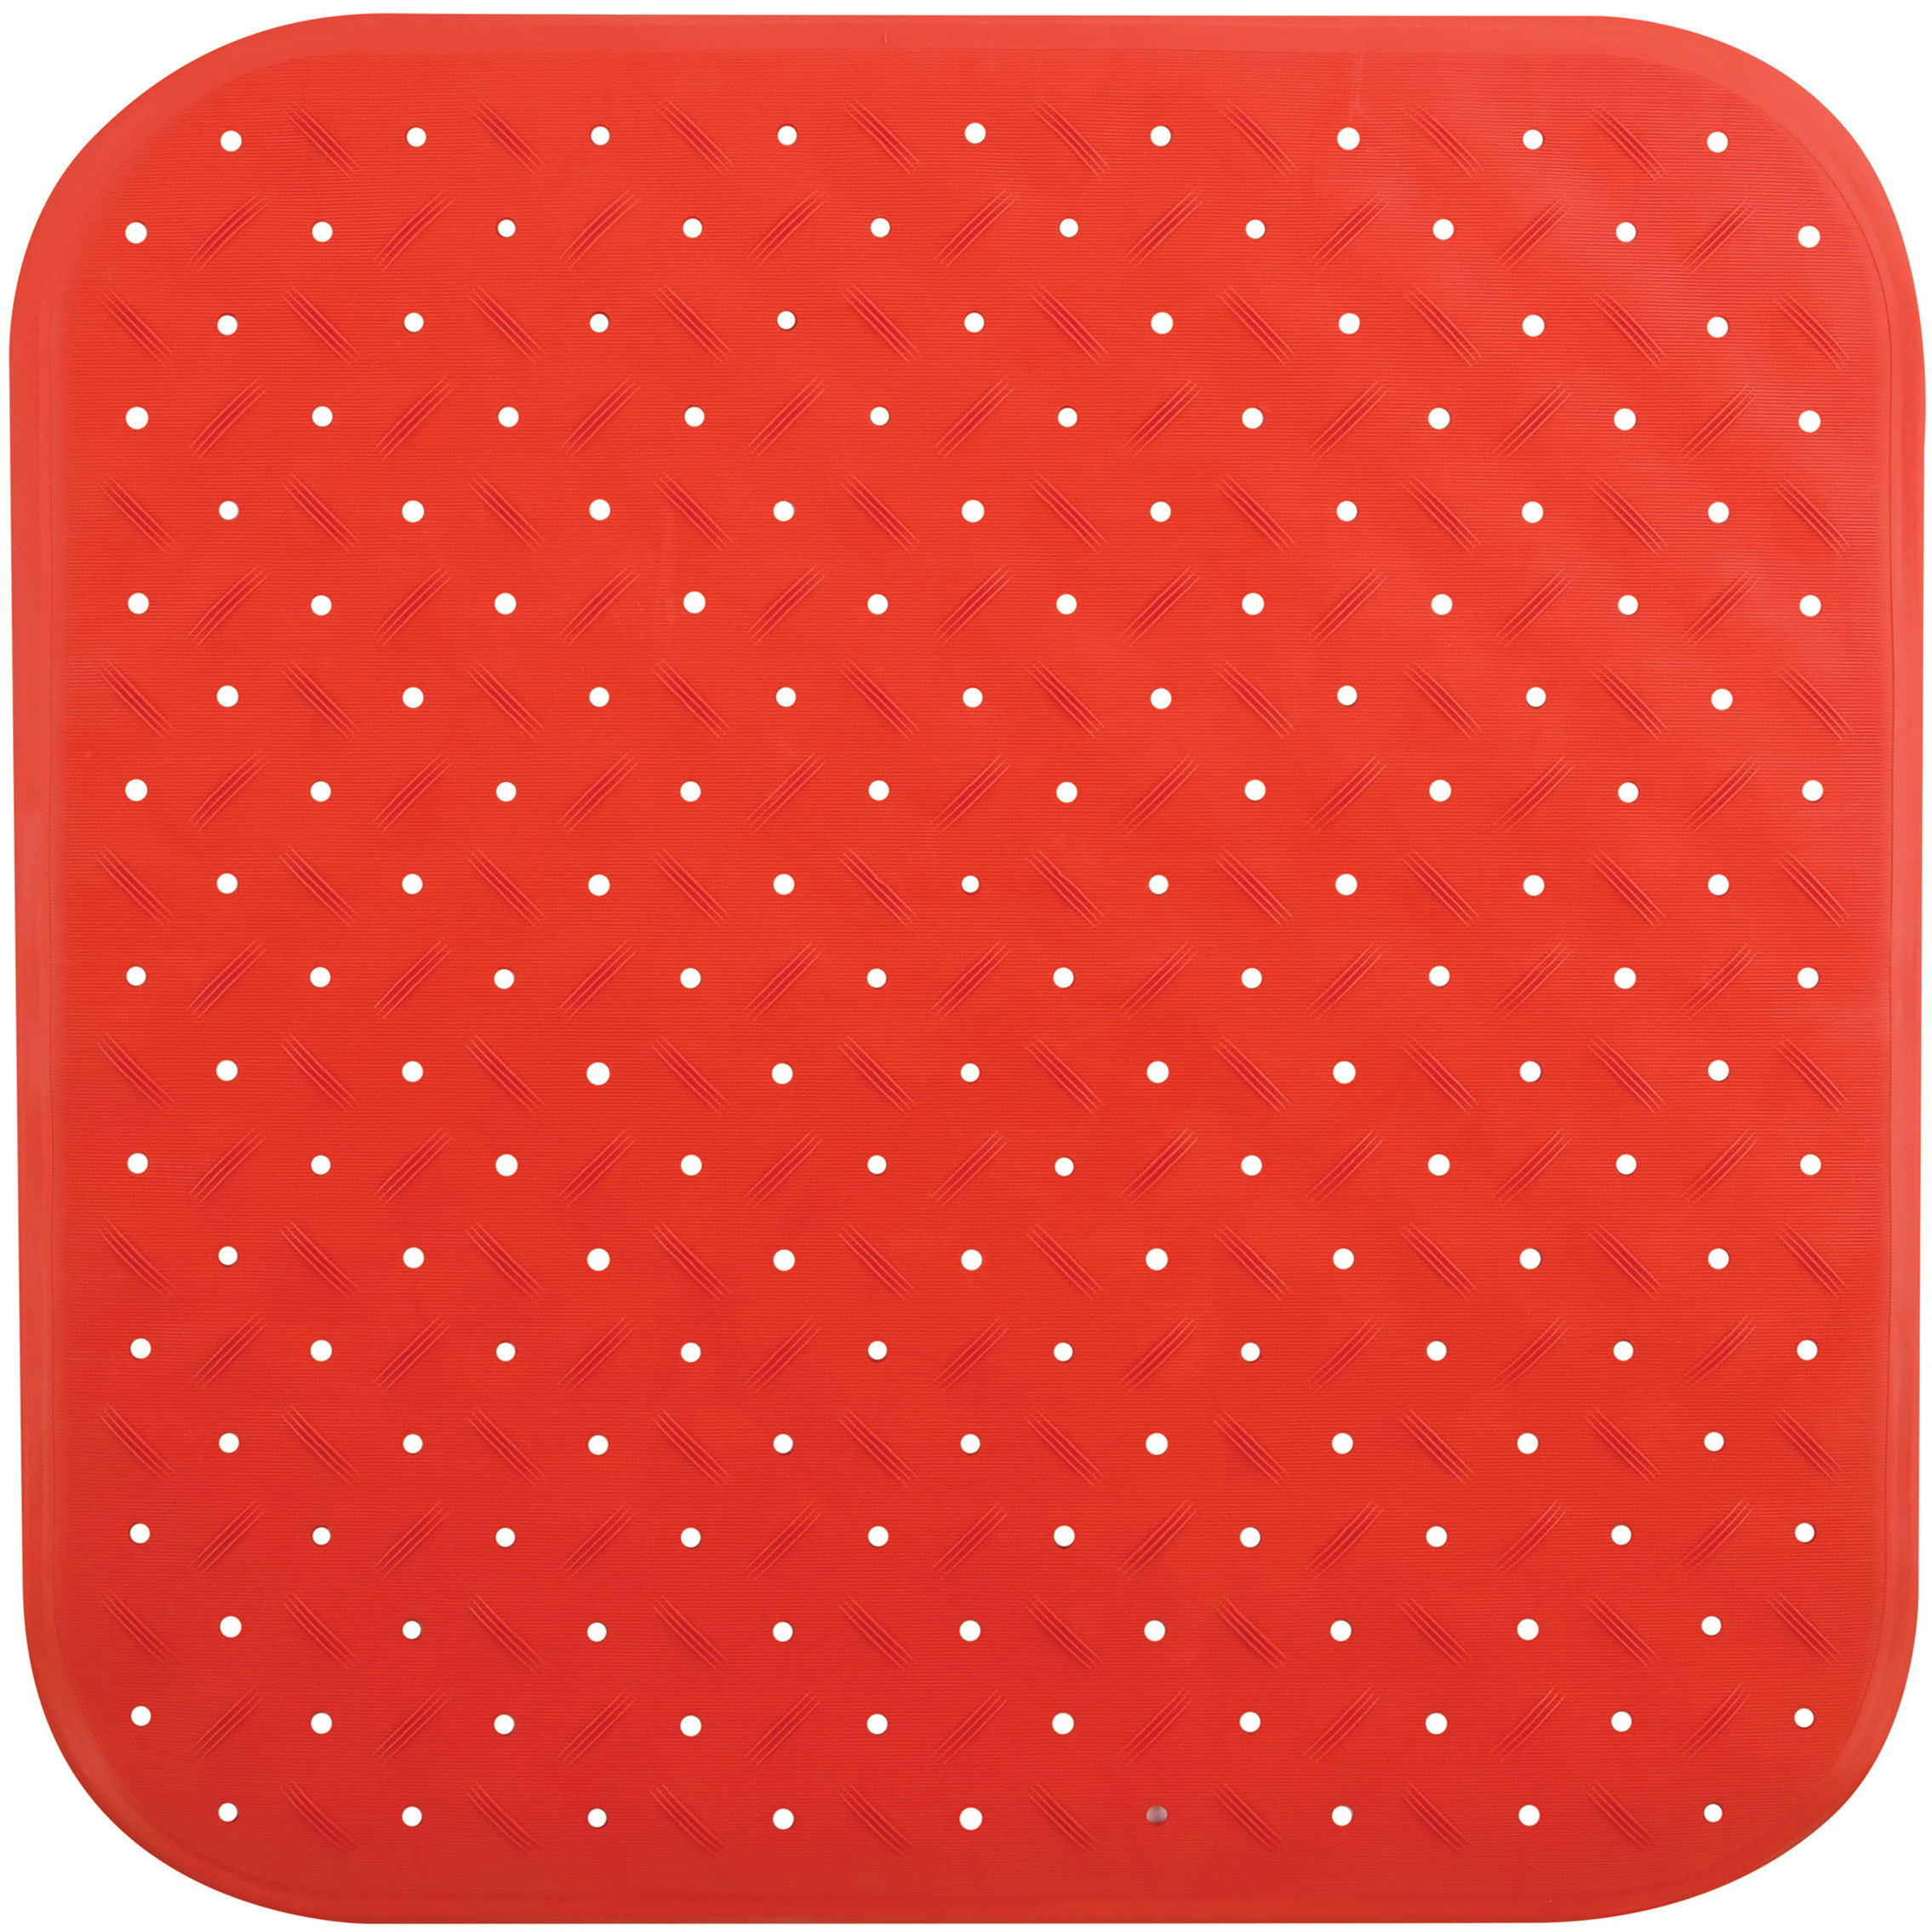 Douche-bad anti-slip mat badkamer rubber rood 54 x 54 cm vierkant